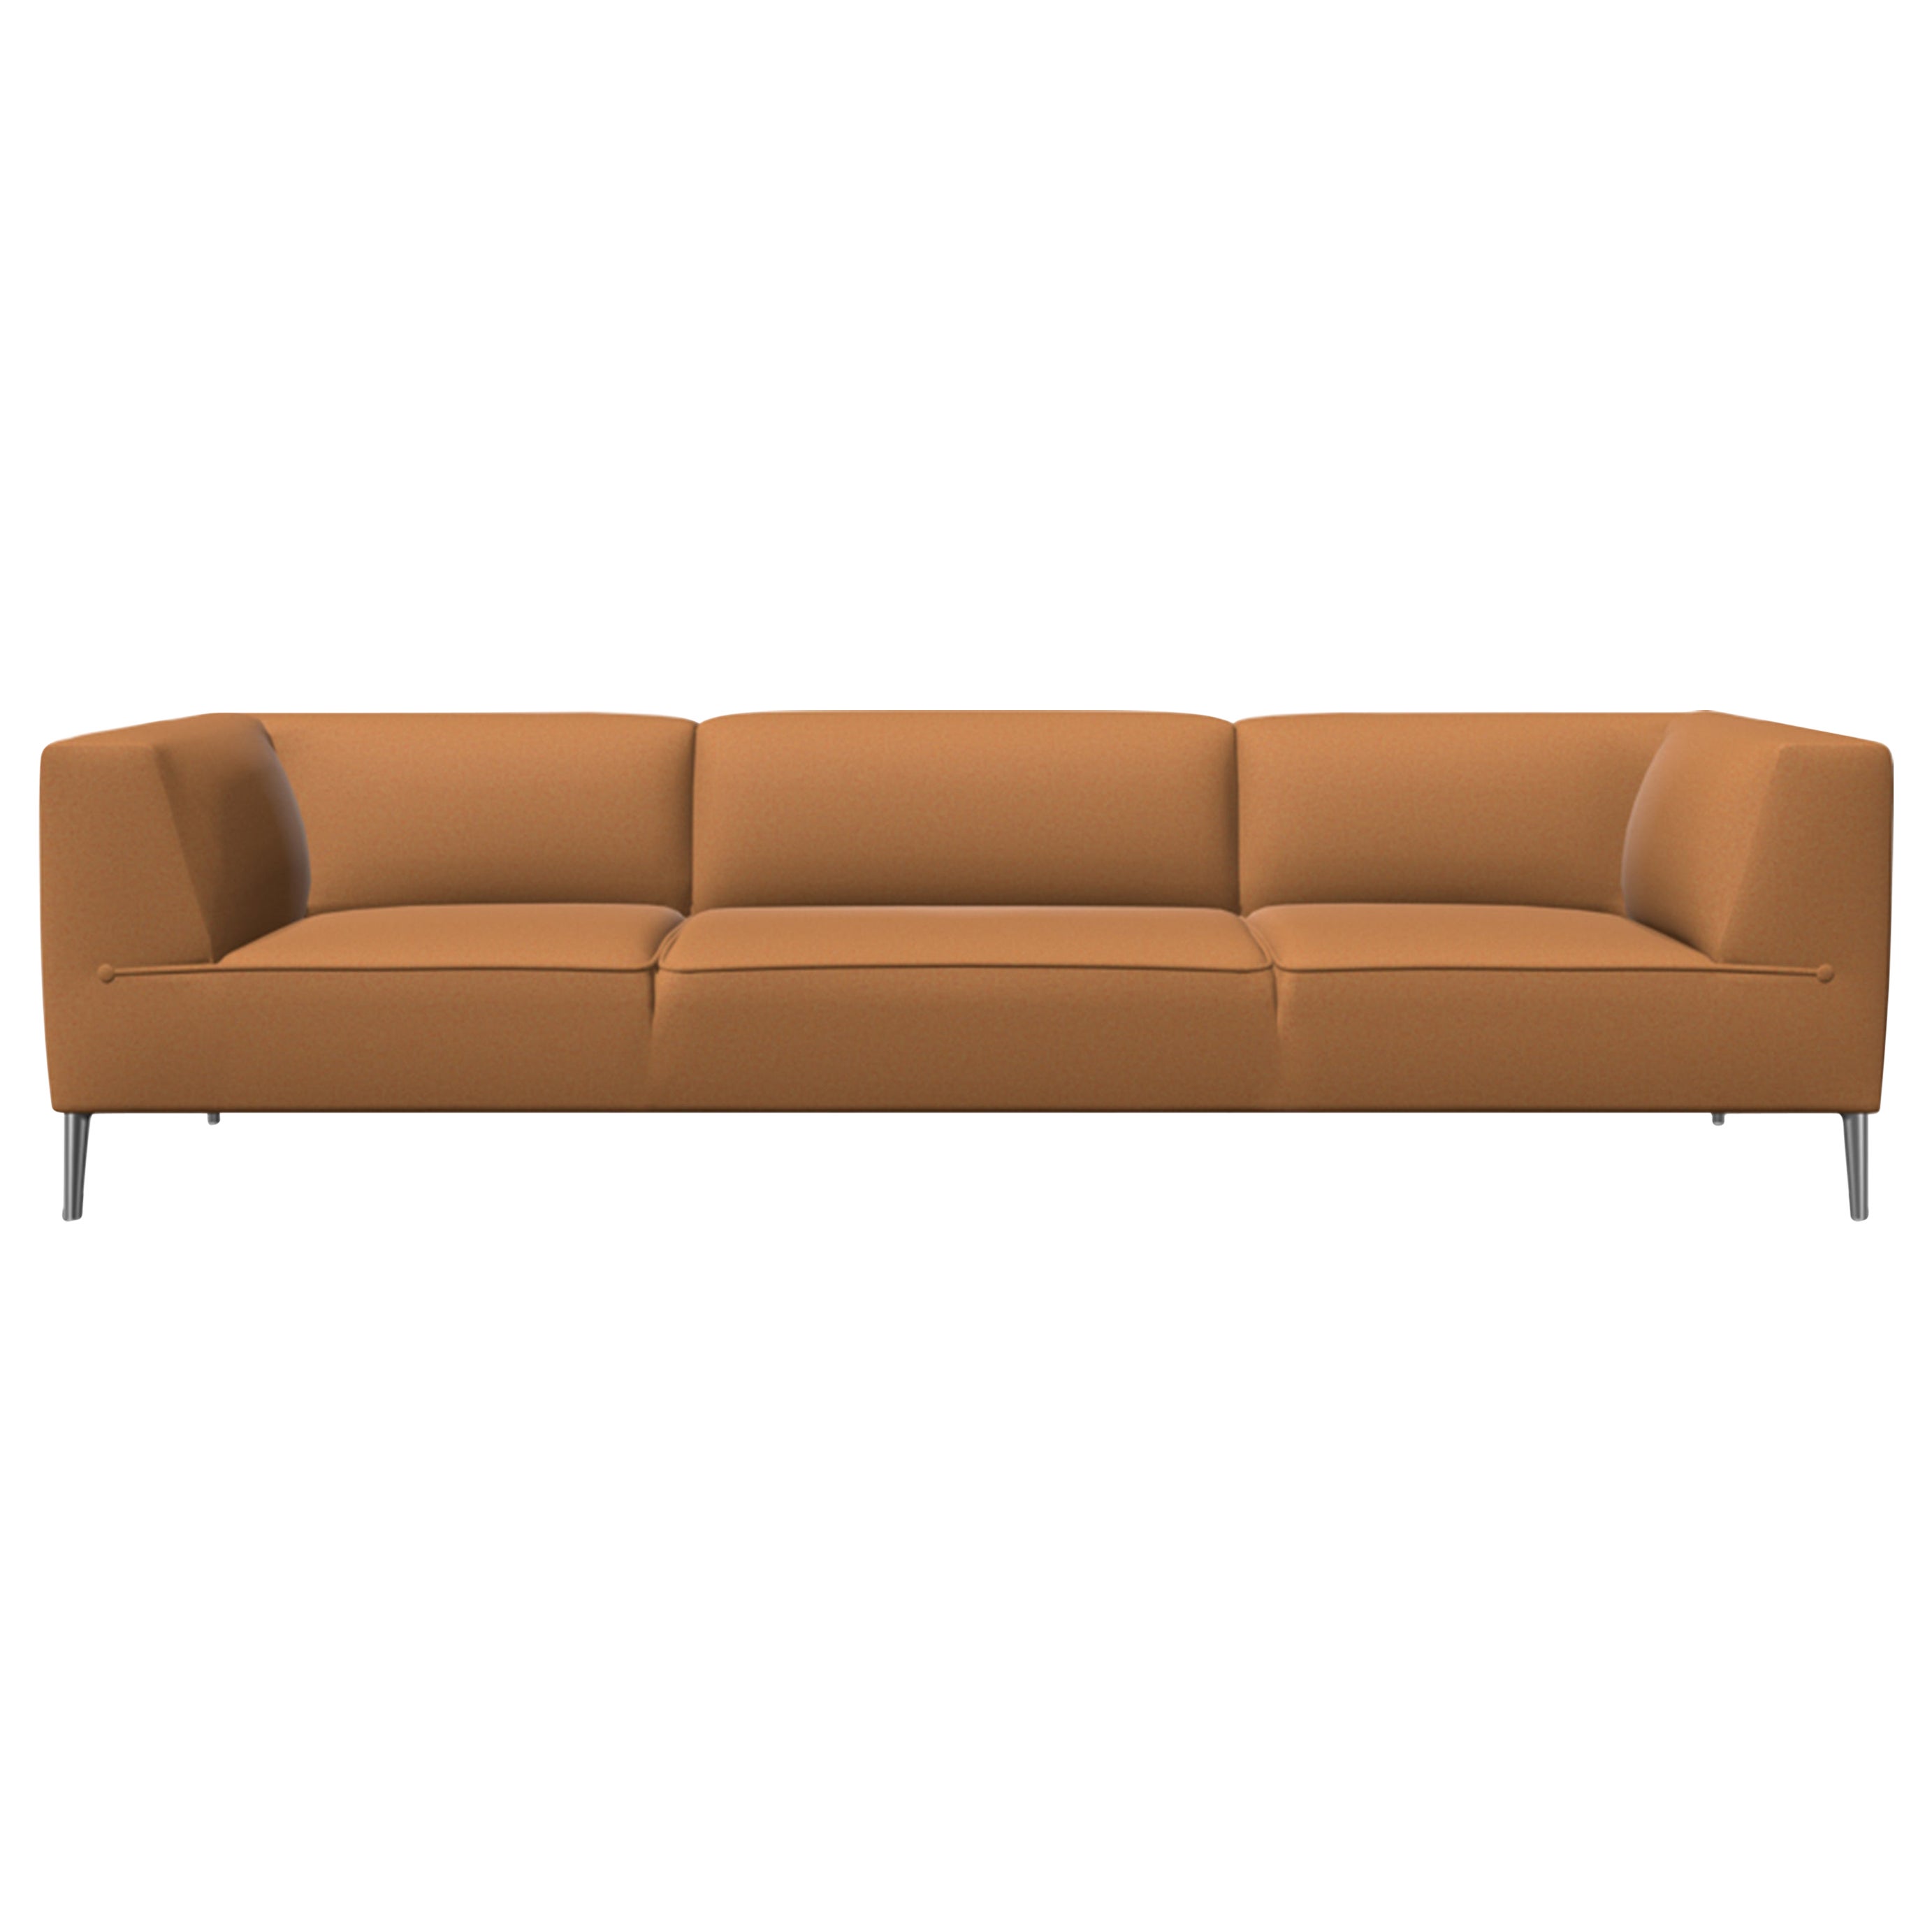 Moooi Triple Seat Sofa So Good in Divina 3 Upholstery & Polished Aluminum Feet